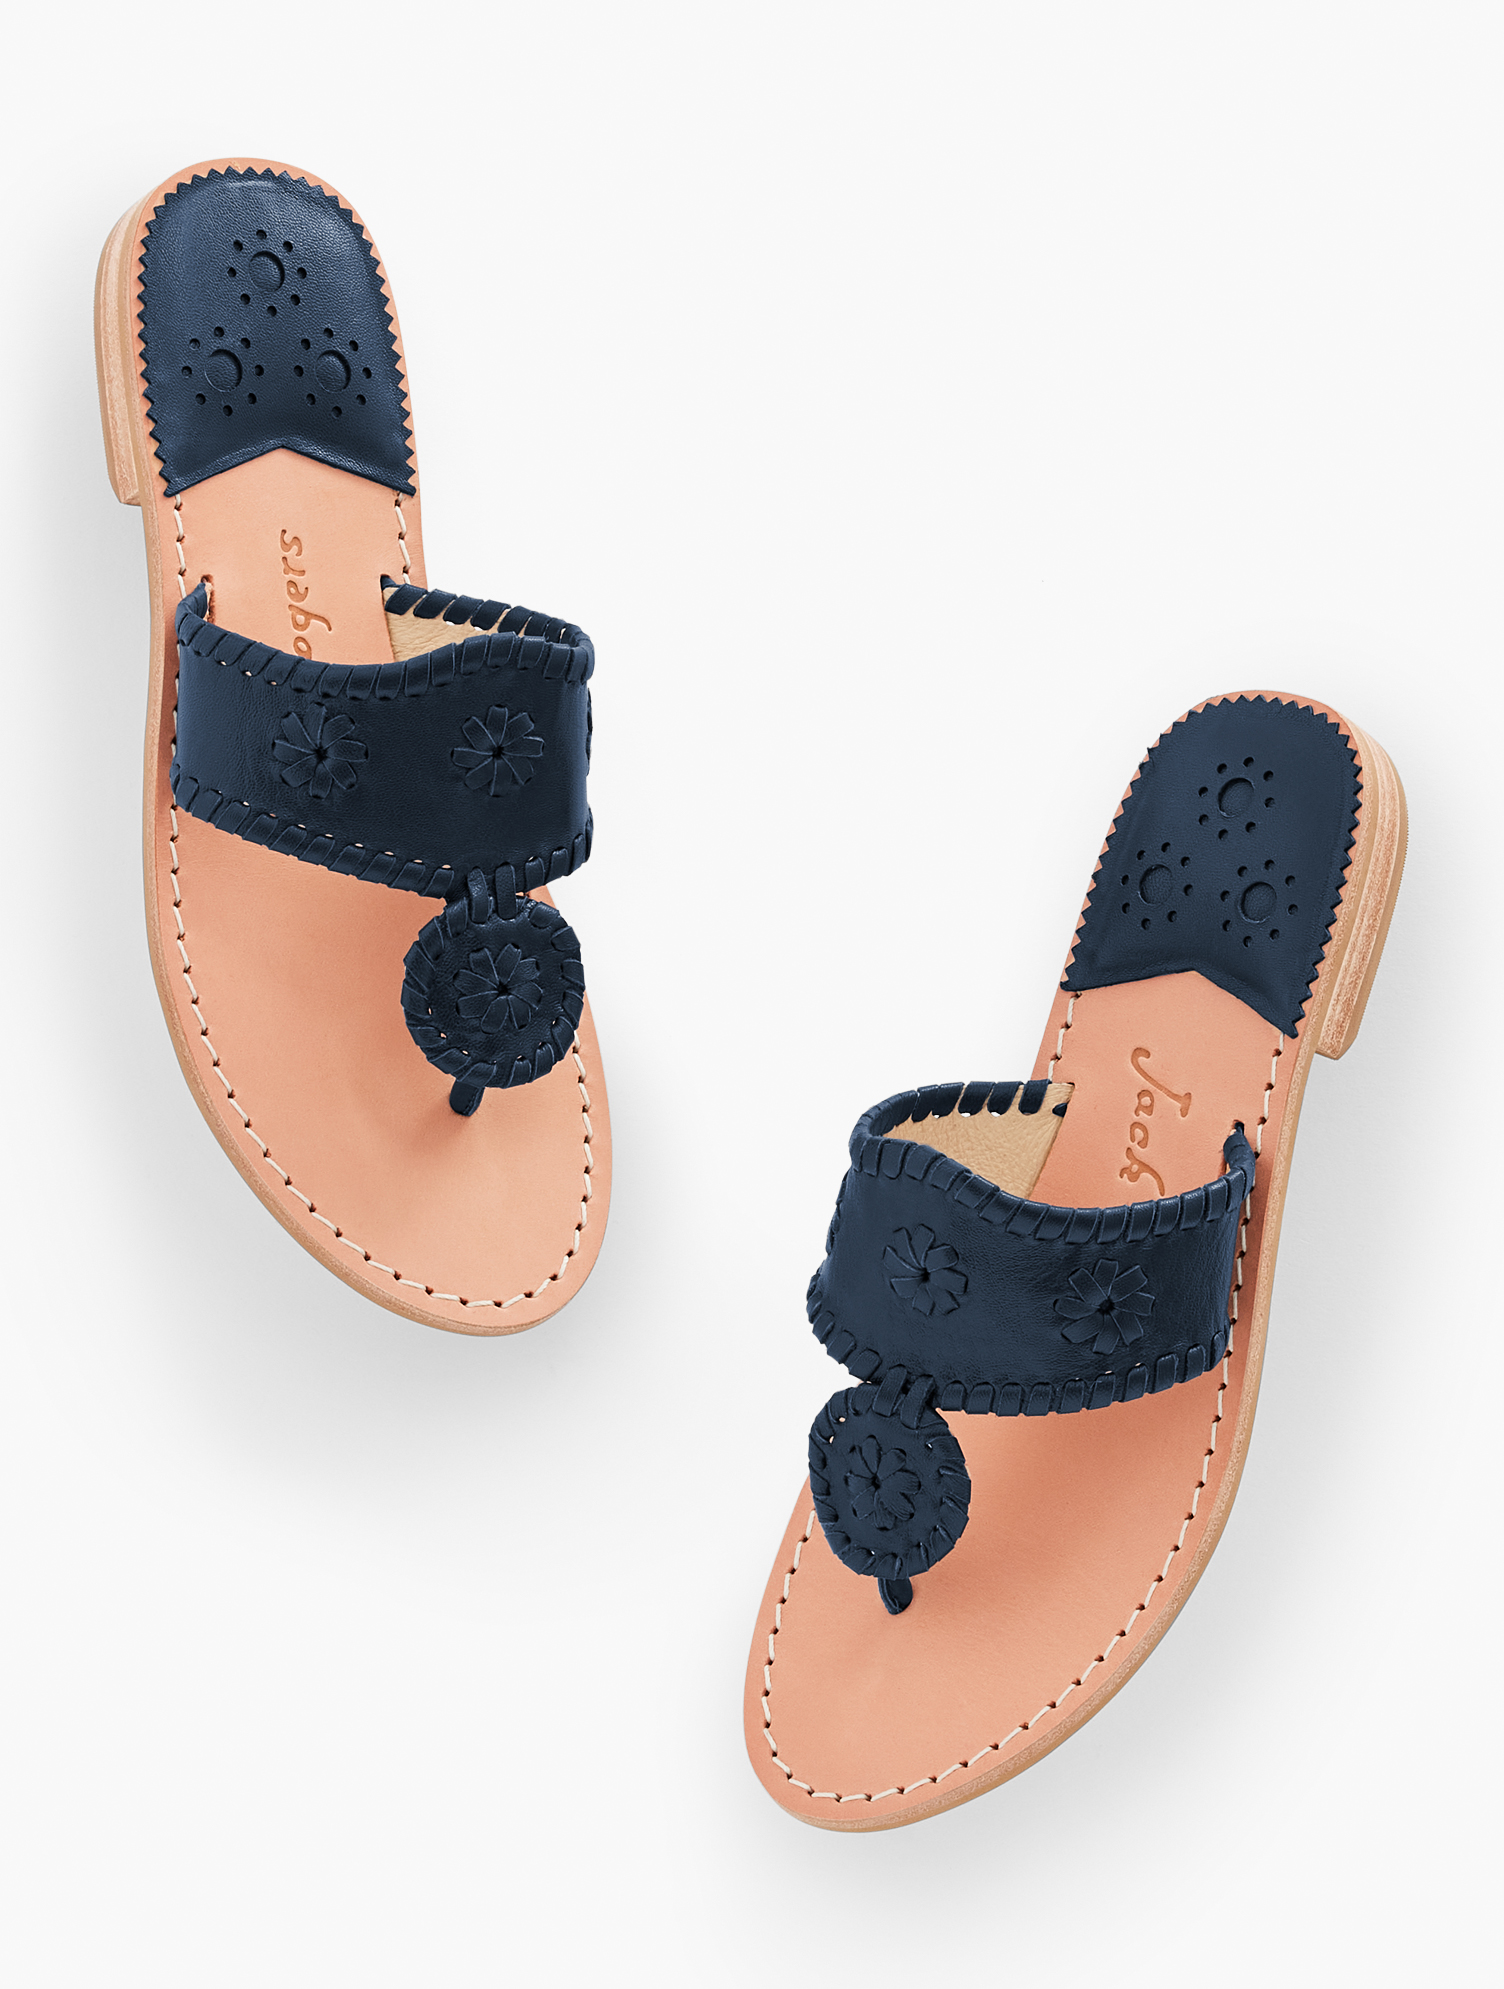 Talbots Jacks Flat Sandals - Midnight Navy Blue - 9m